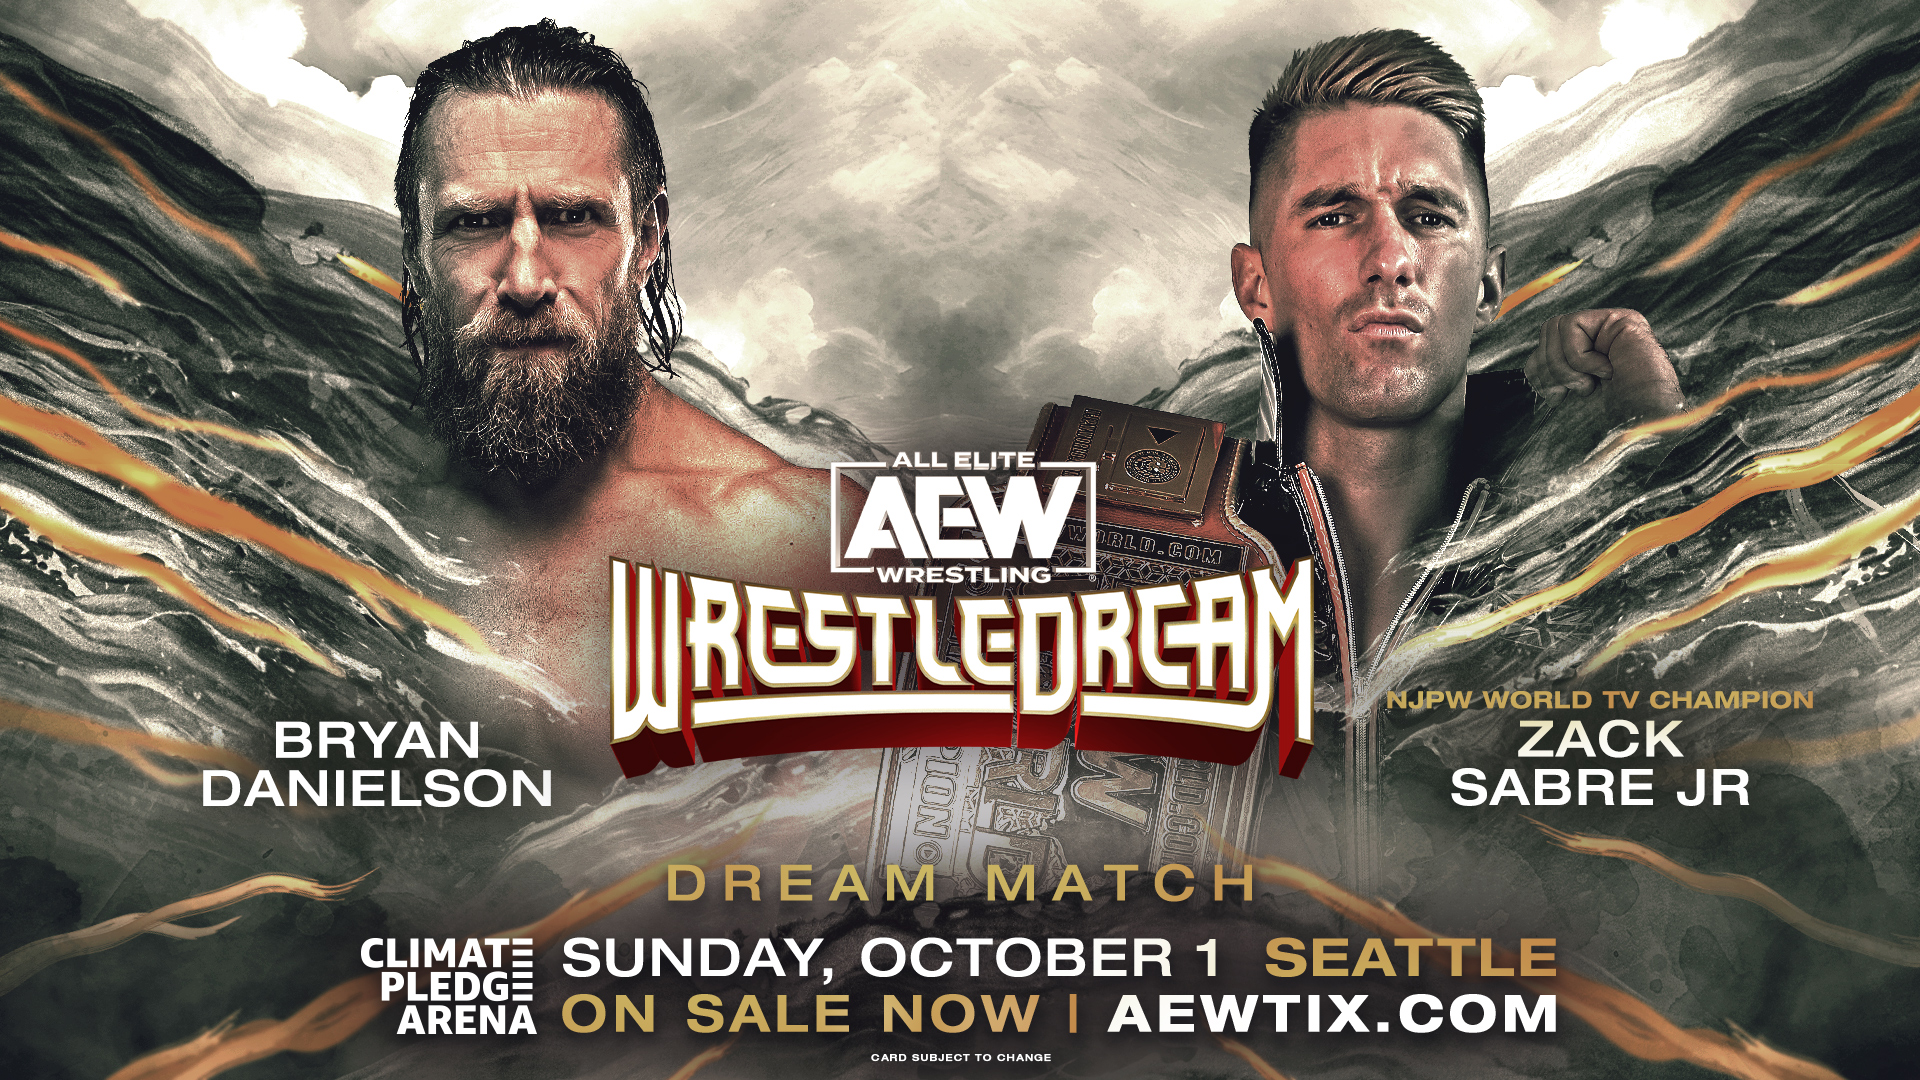 Bryan Danielson Expresses Disinterest in AEW WrestleDream Match as Headliner with Zack Sabre Jr.